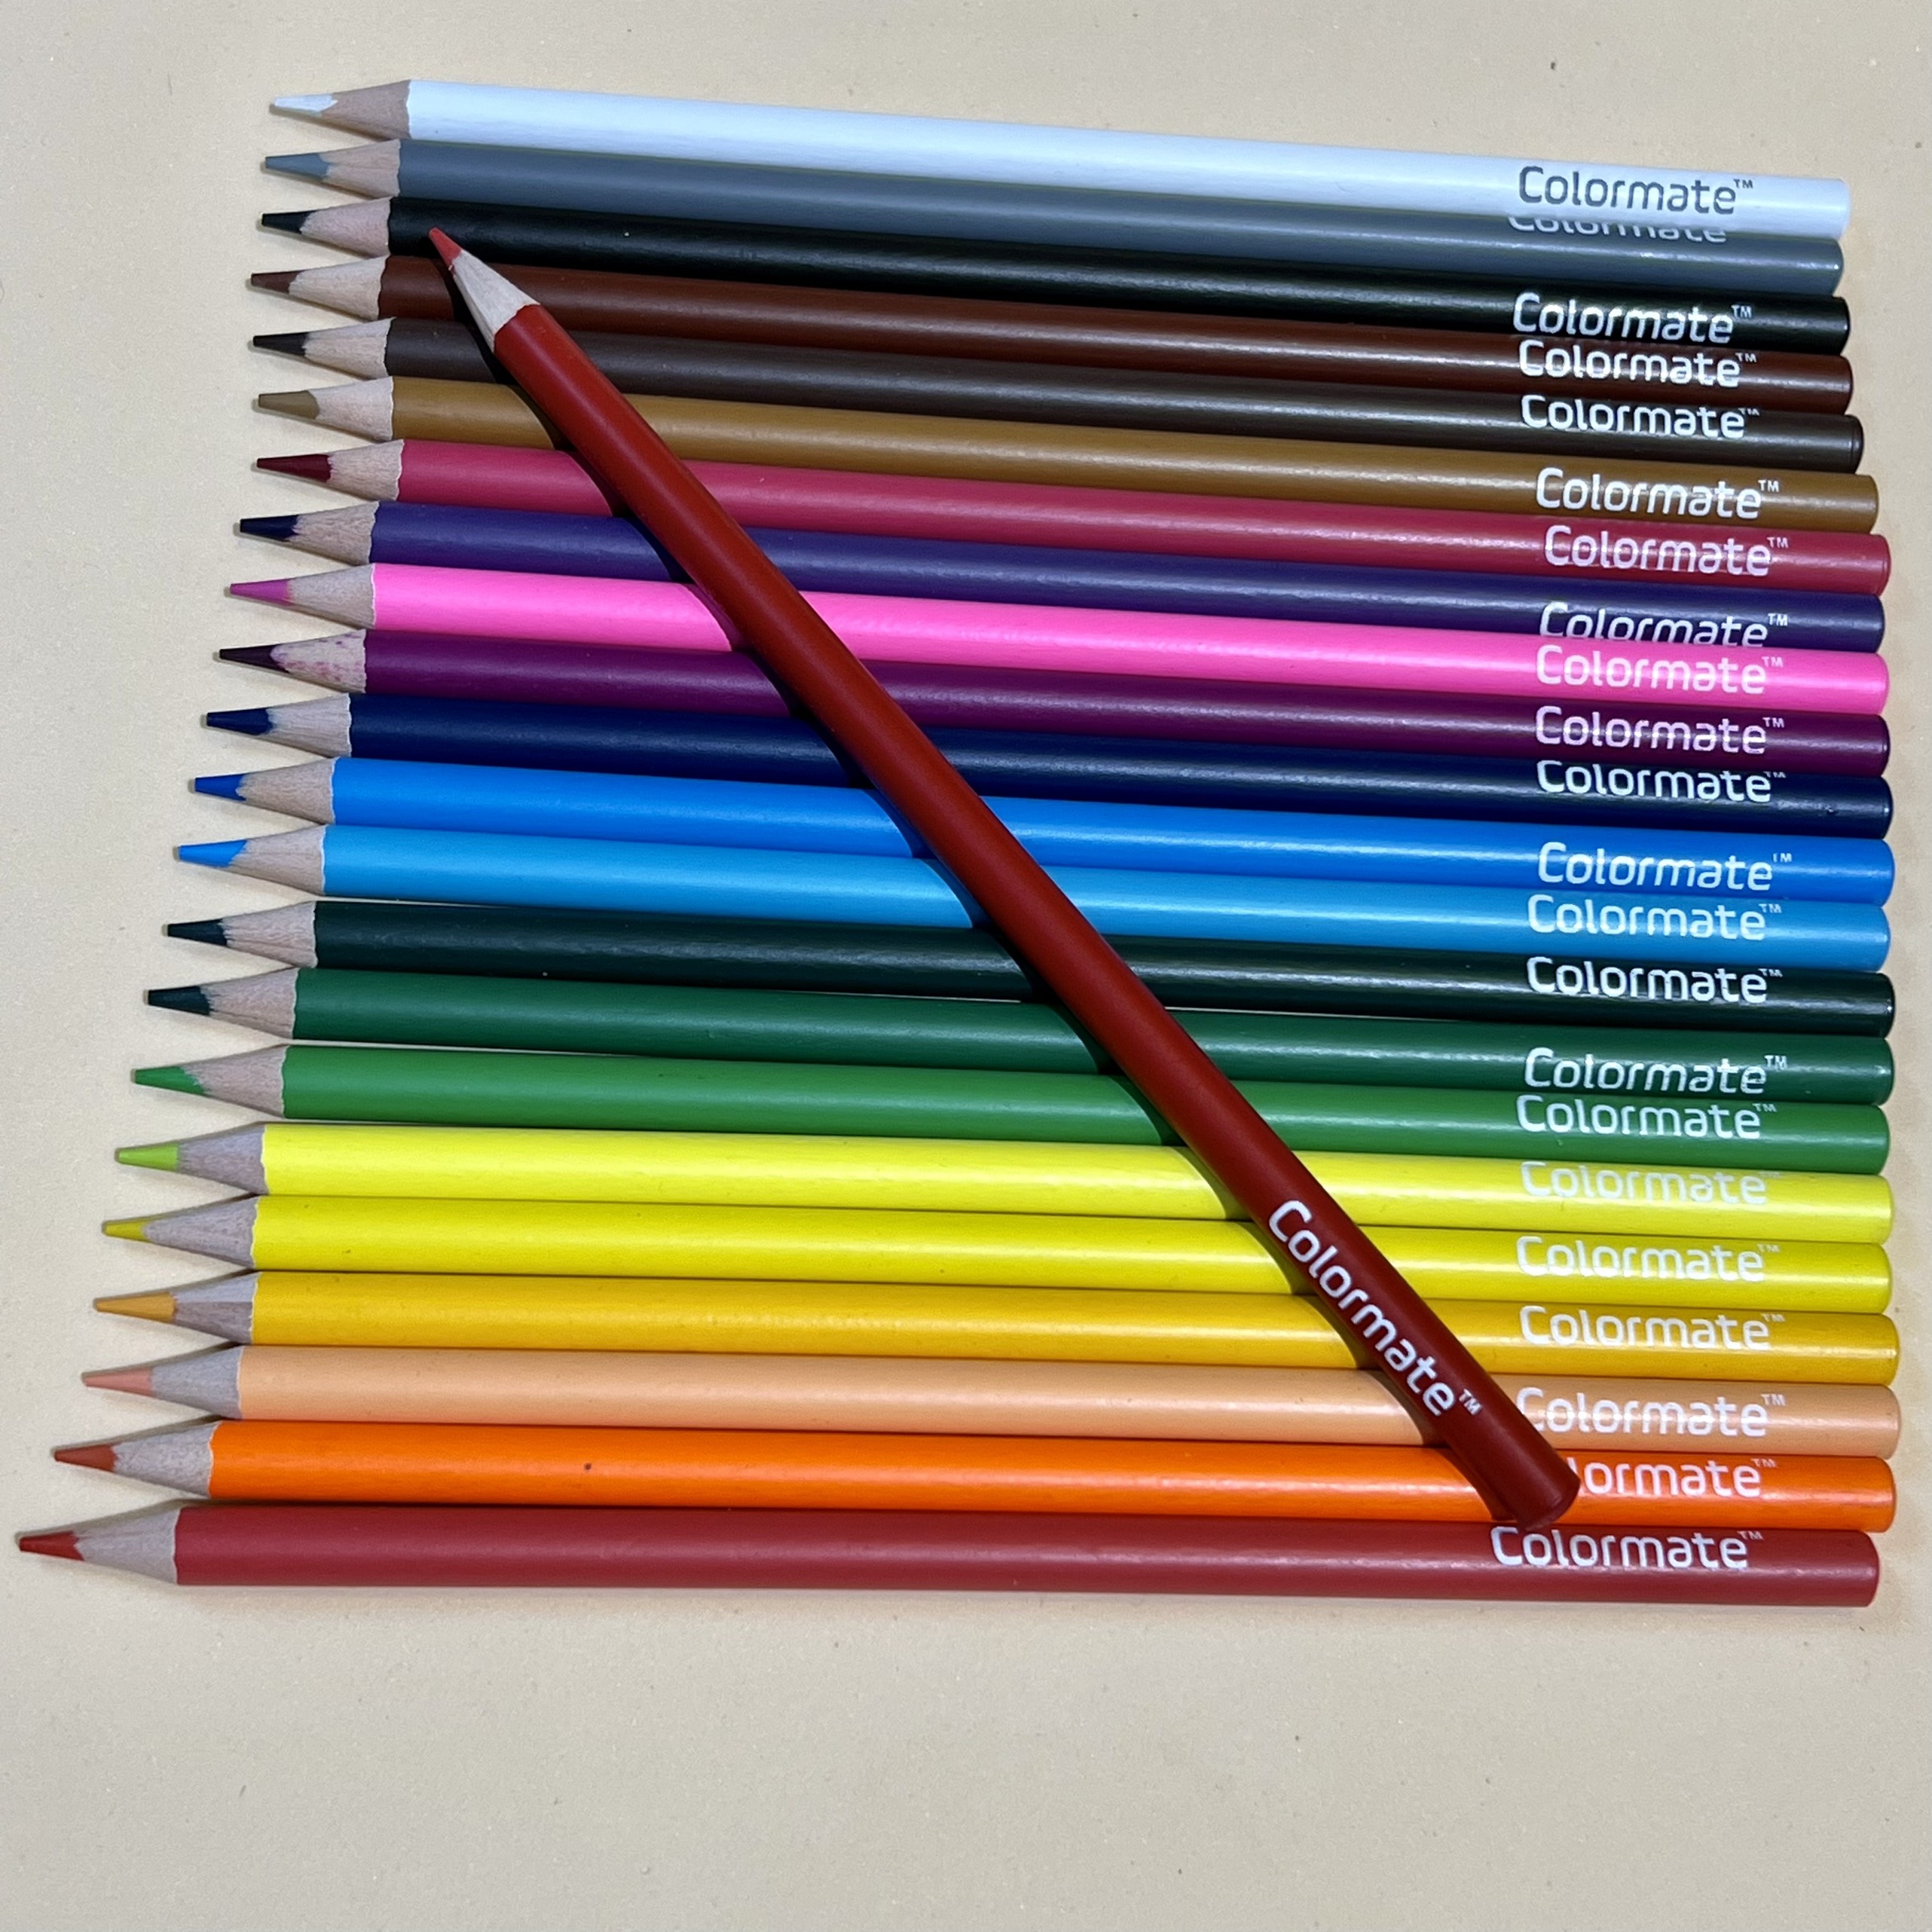 Bút chì màu Colormate thân gỗ nhiều màu - COLORMATE